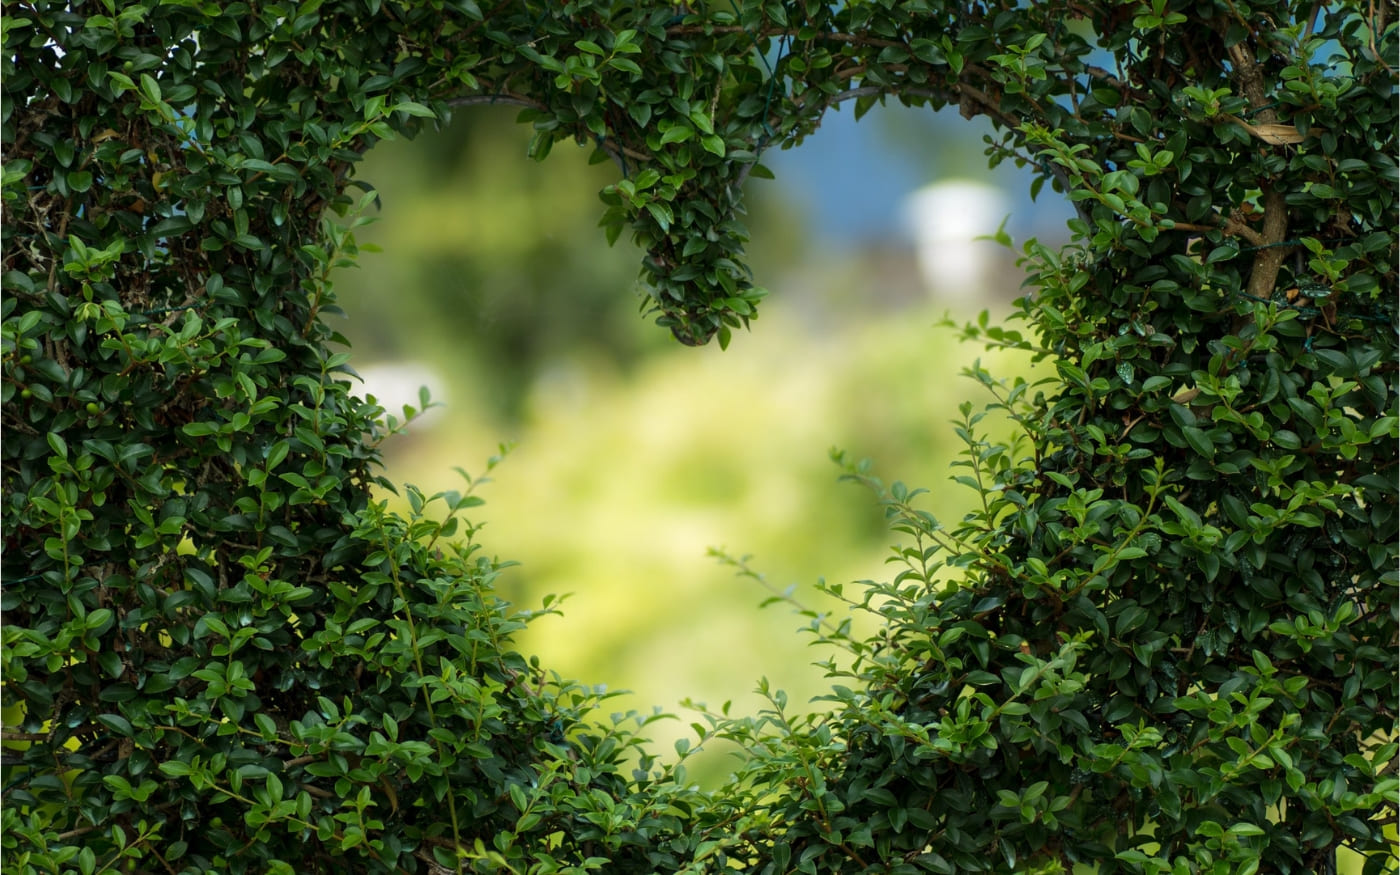 Heart shaped cut out in green bush